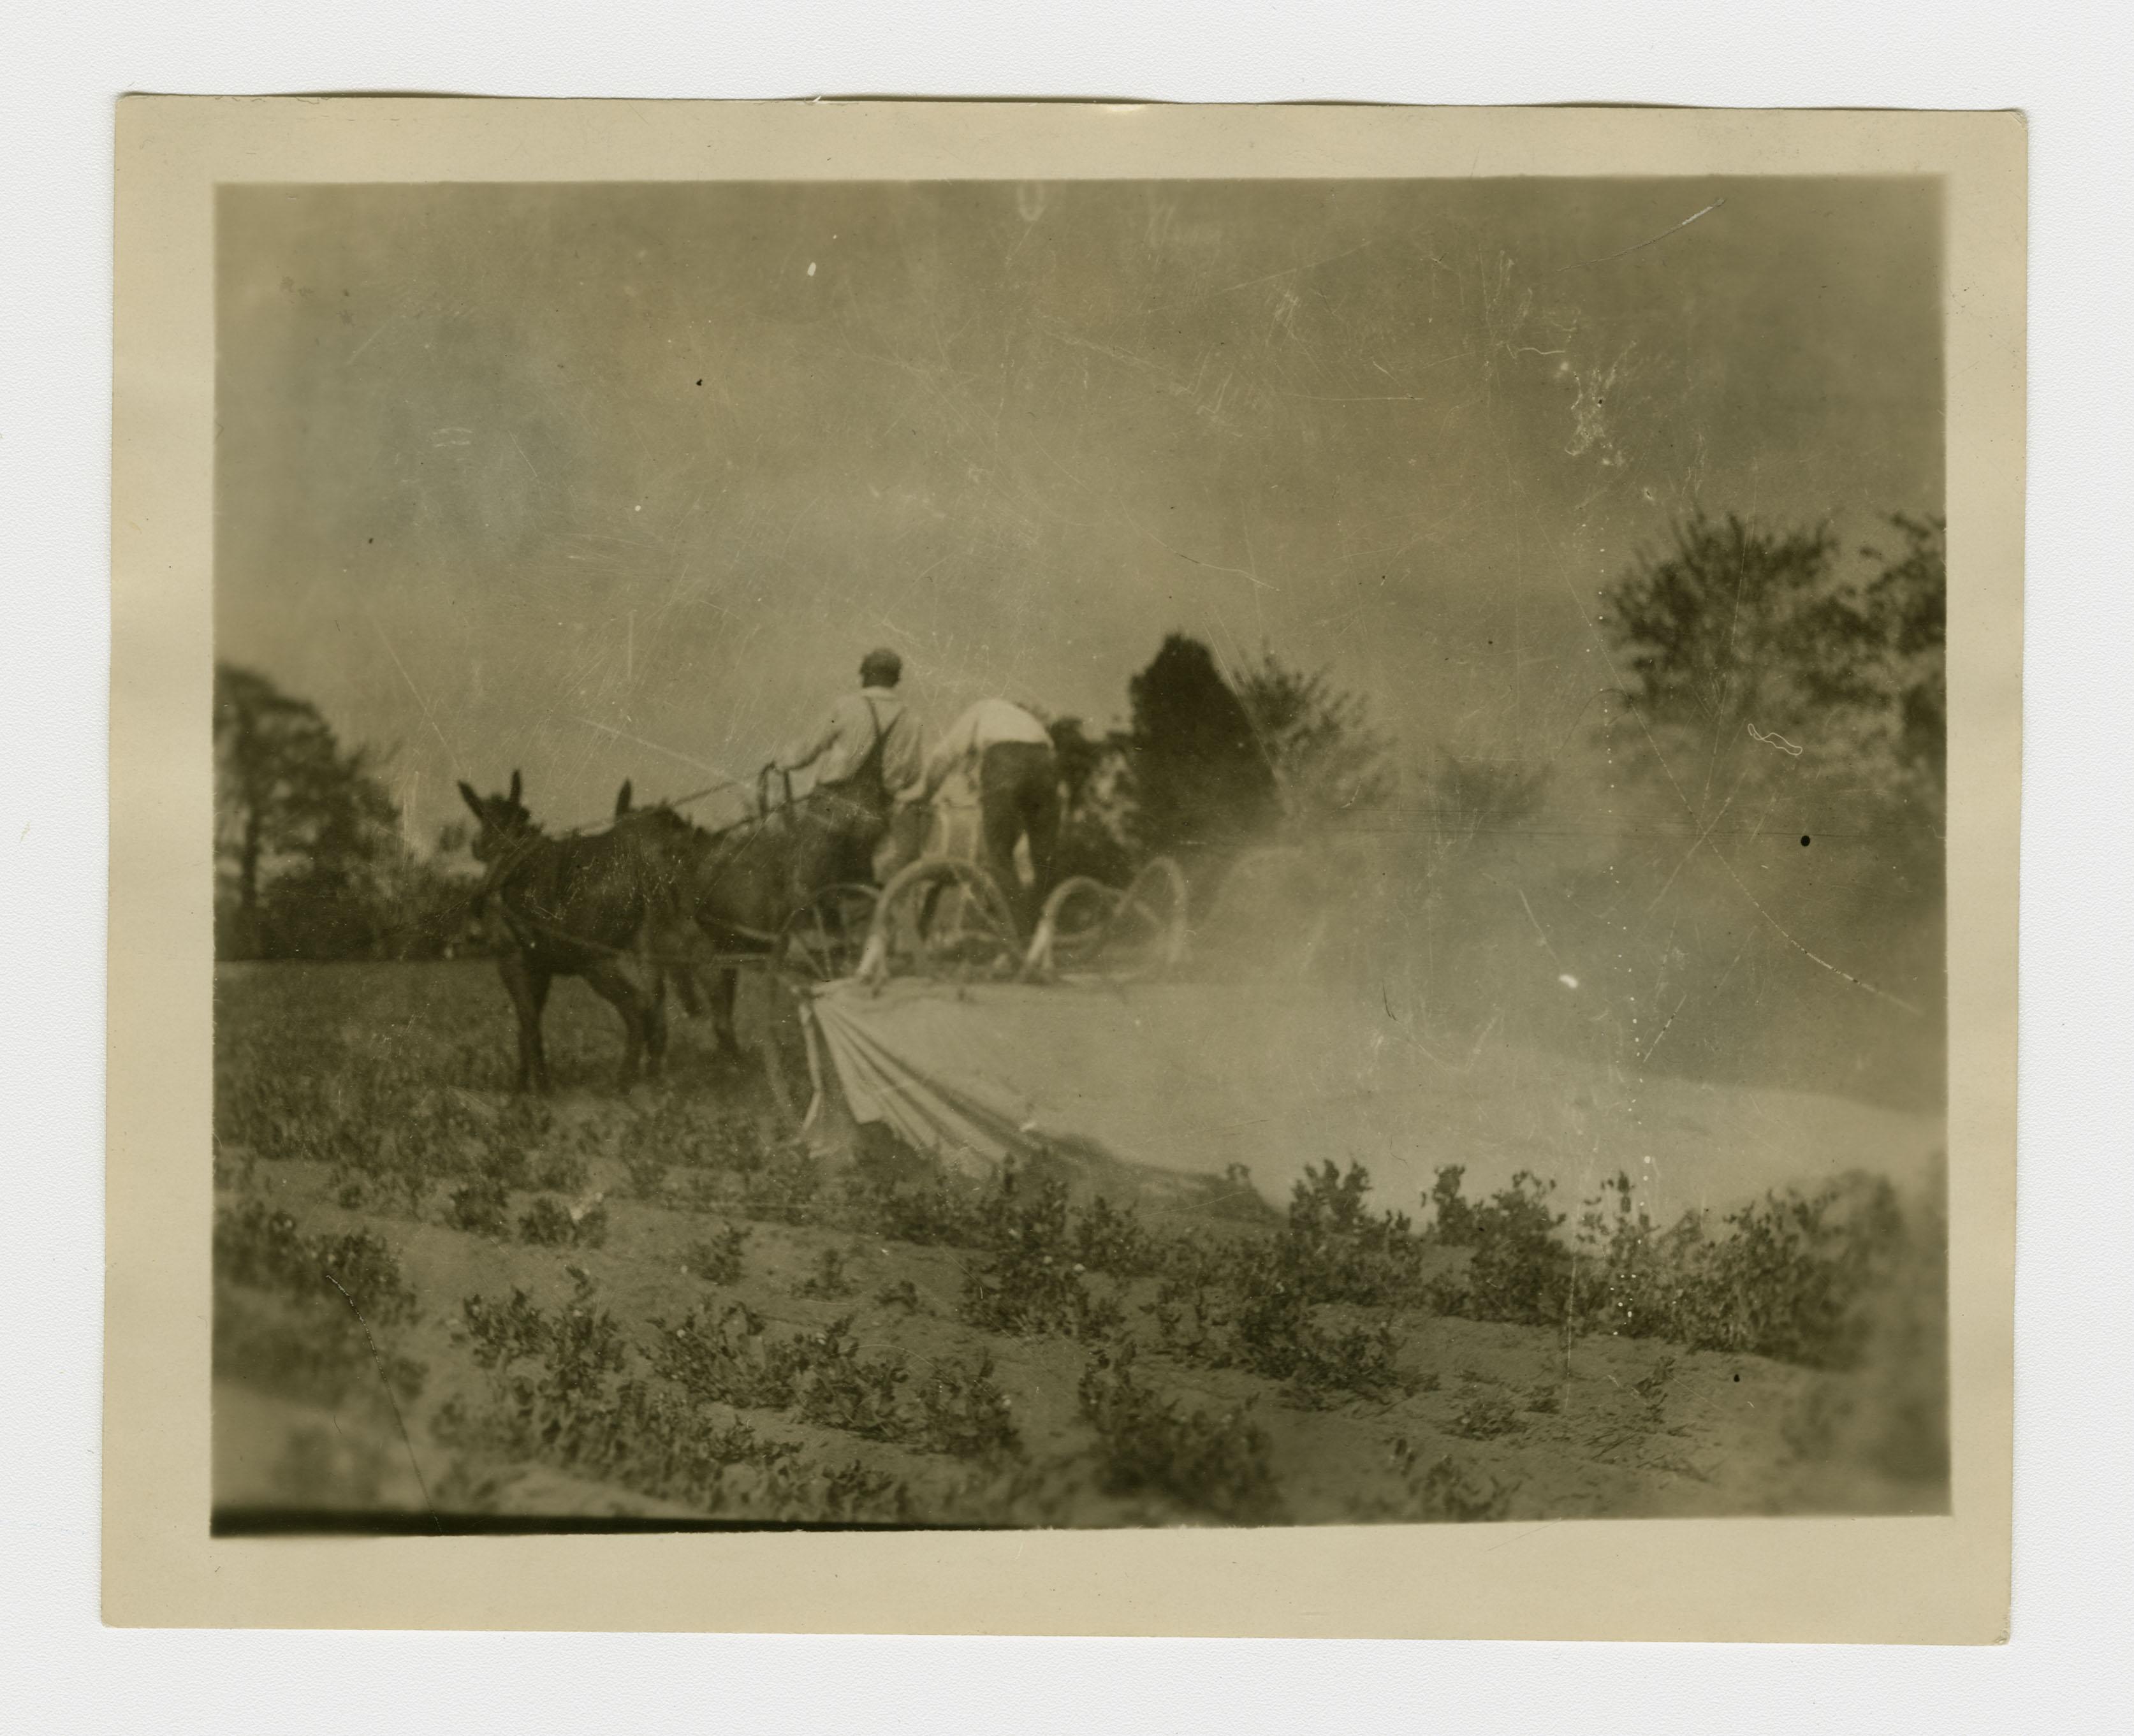 Black man sat atop a horse-drawn cart, spraying fields